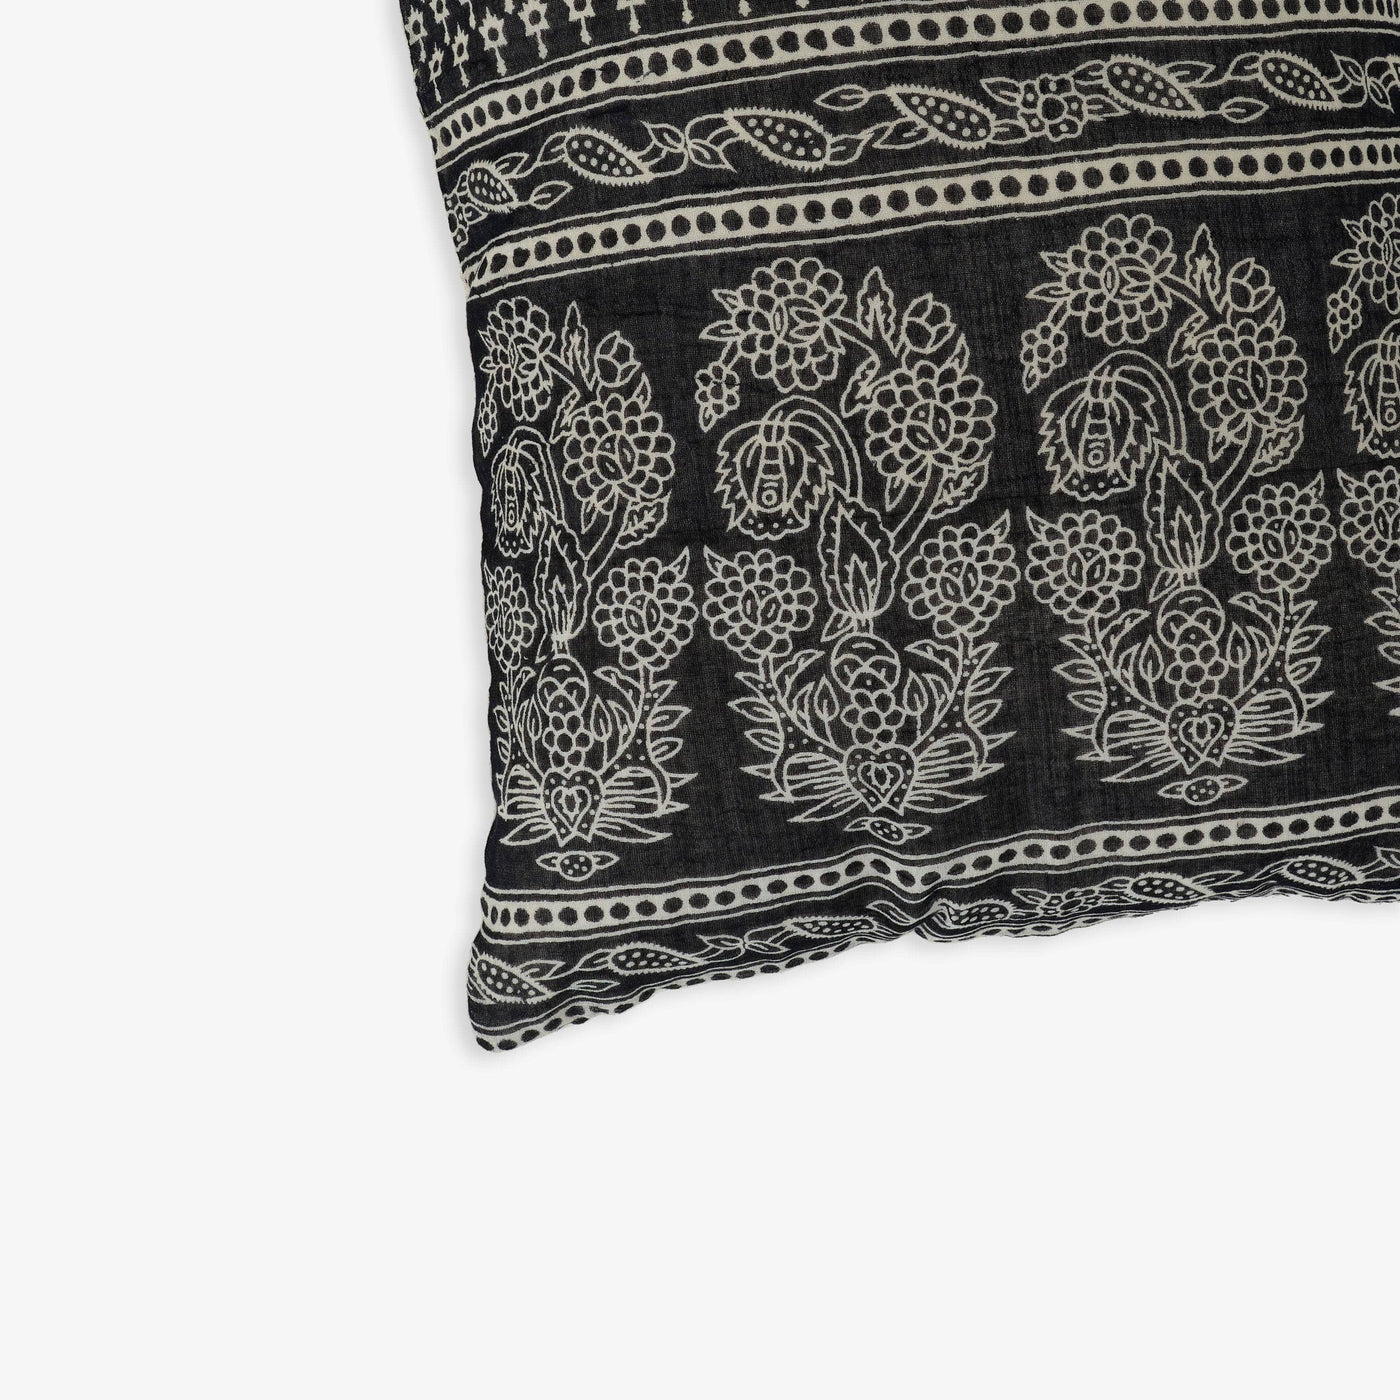 Luis Cushion Cover, Black, 45x60 cm Cushion Covers sazy.com